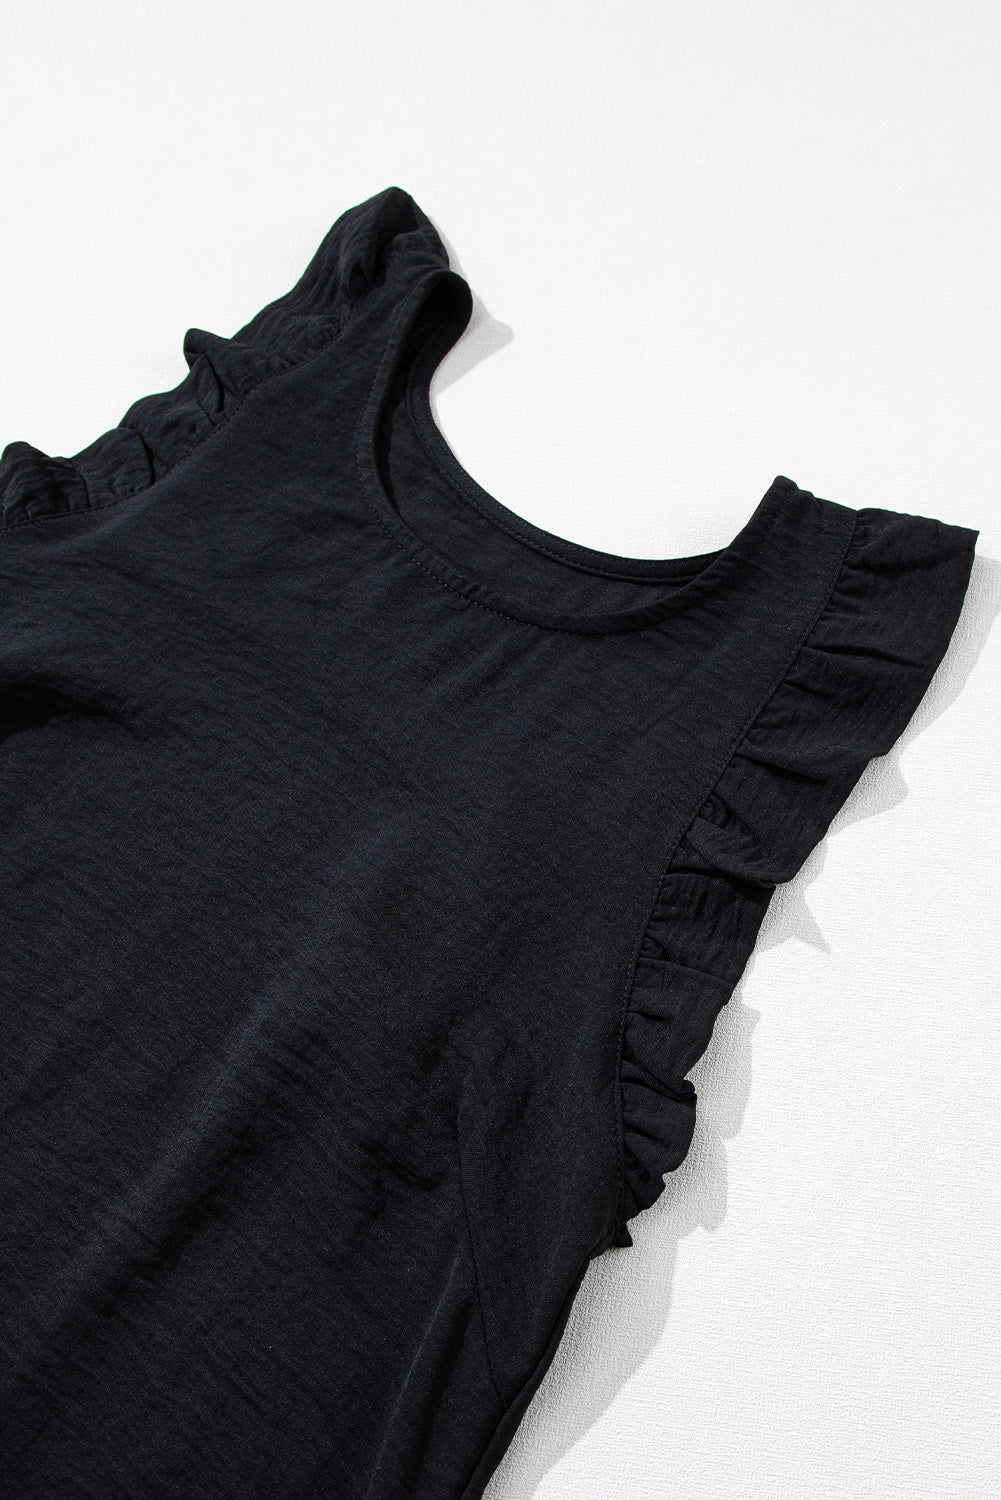 Black Solid Color Ruffled Sleeveless Shift Mini Dress